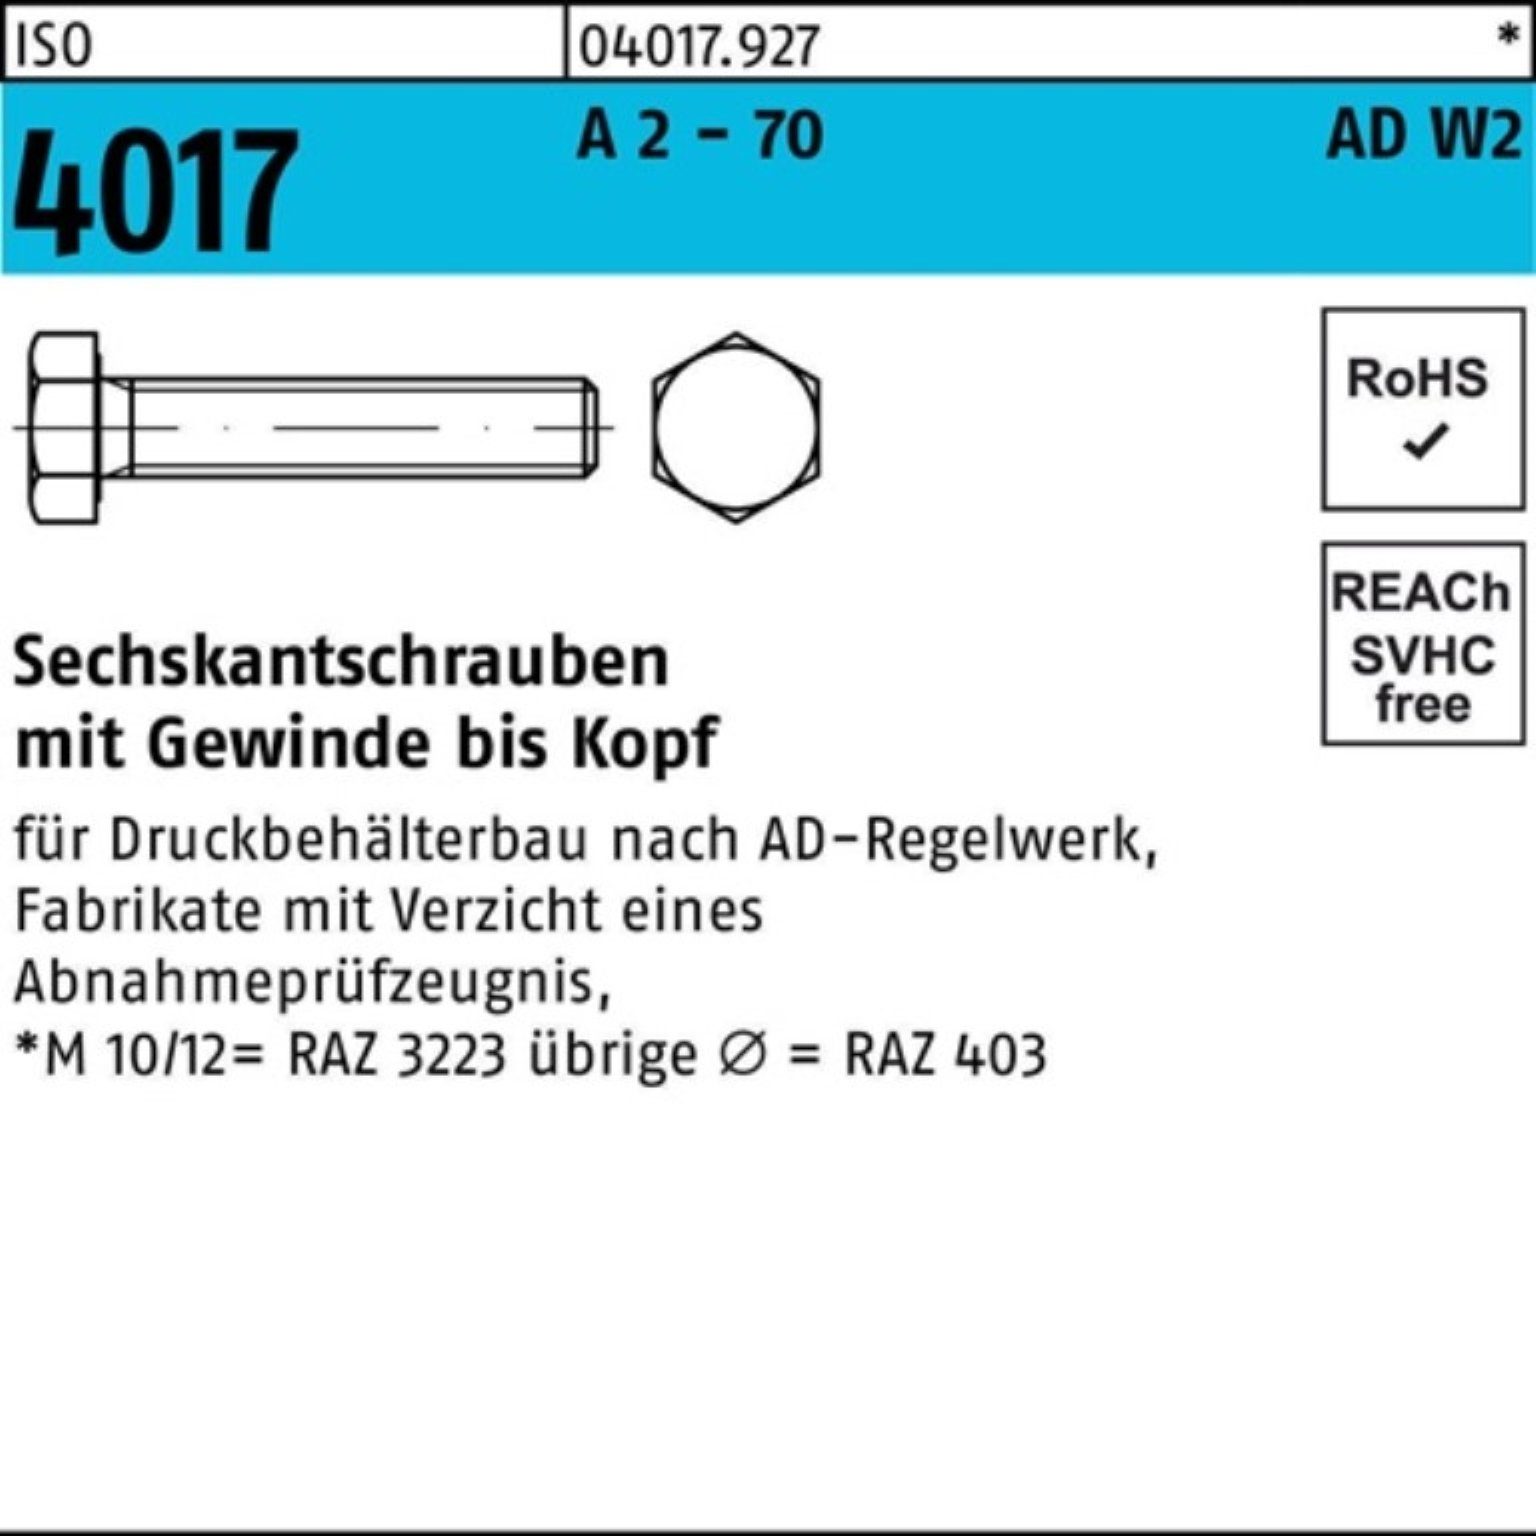 Sechskantschraube Bufab M12x Pack 100er 50 A 4017 ISO - AD-W2 VG 70 St 2 Sechskantschraube 50